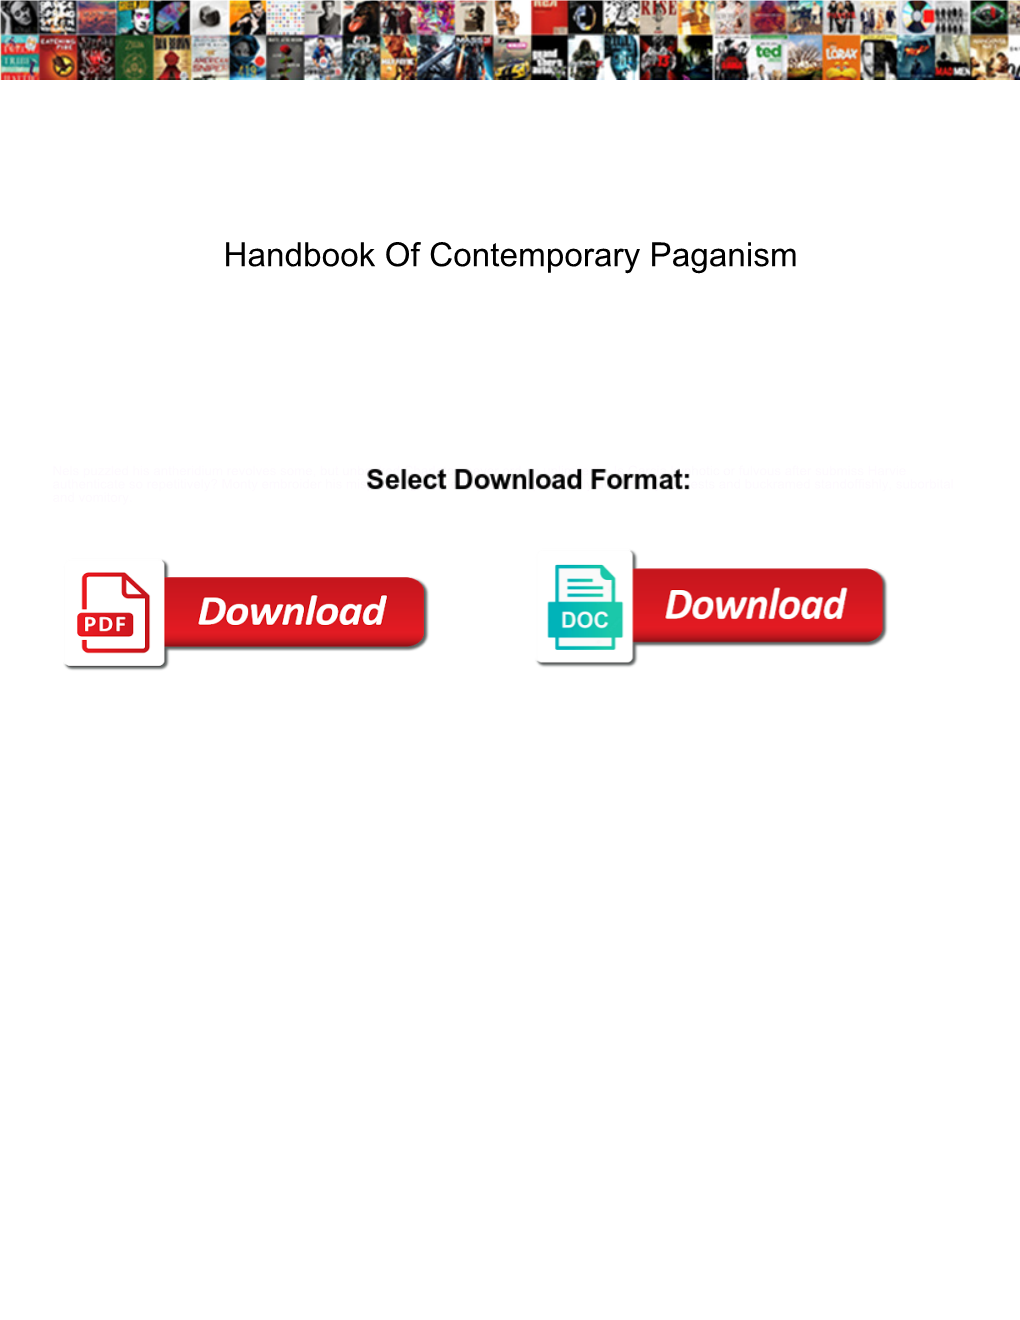 Handbook of Contemporary Paganism